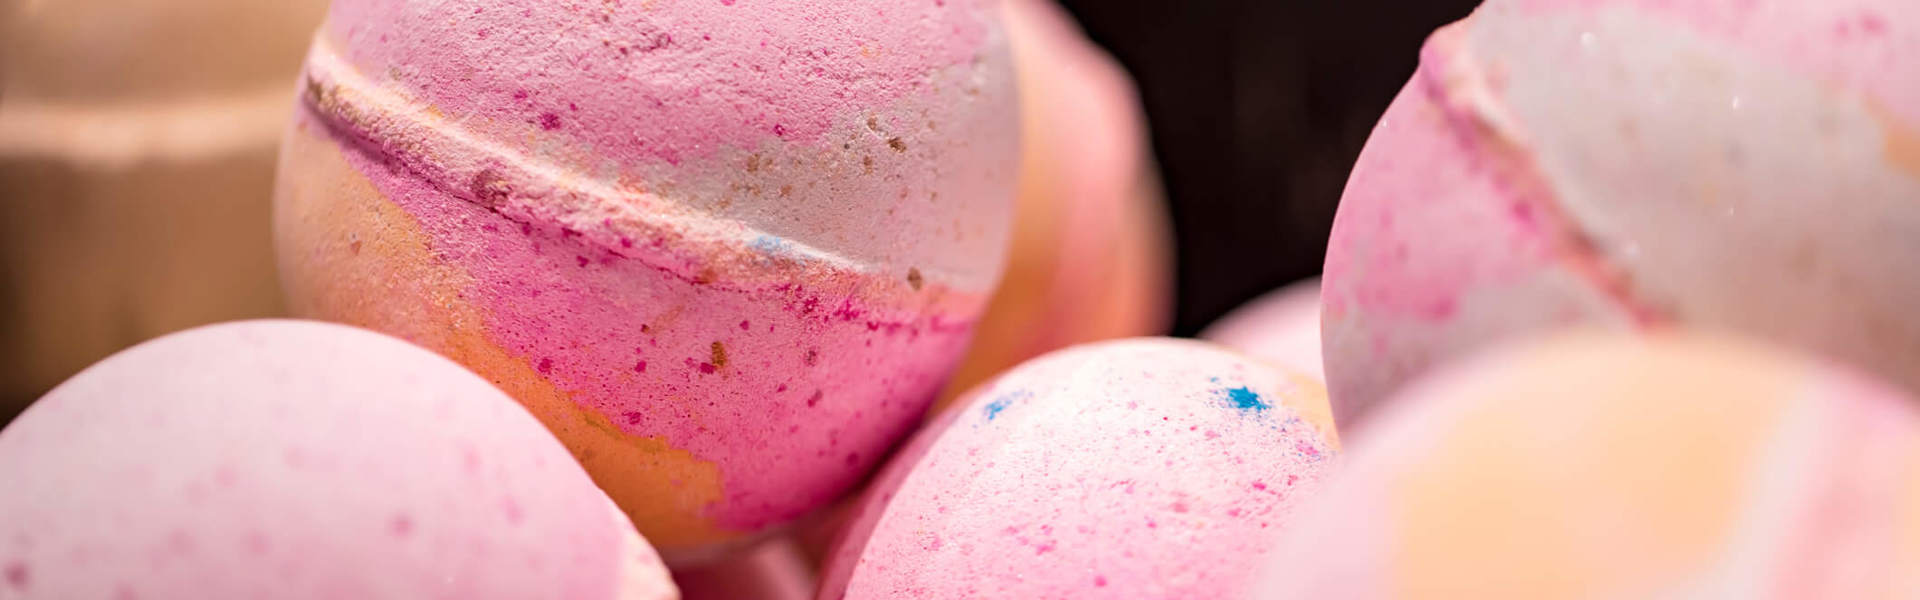 a close up of pink bath bombs